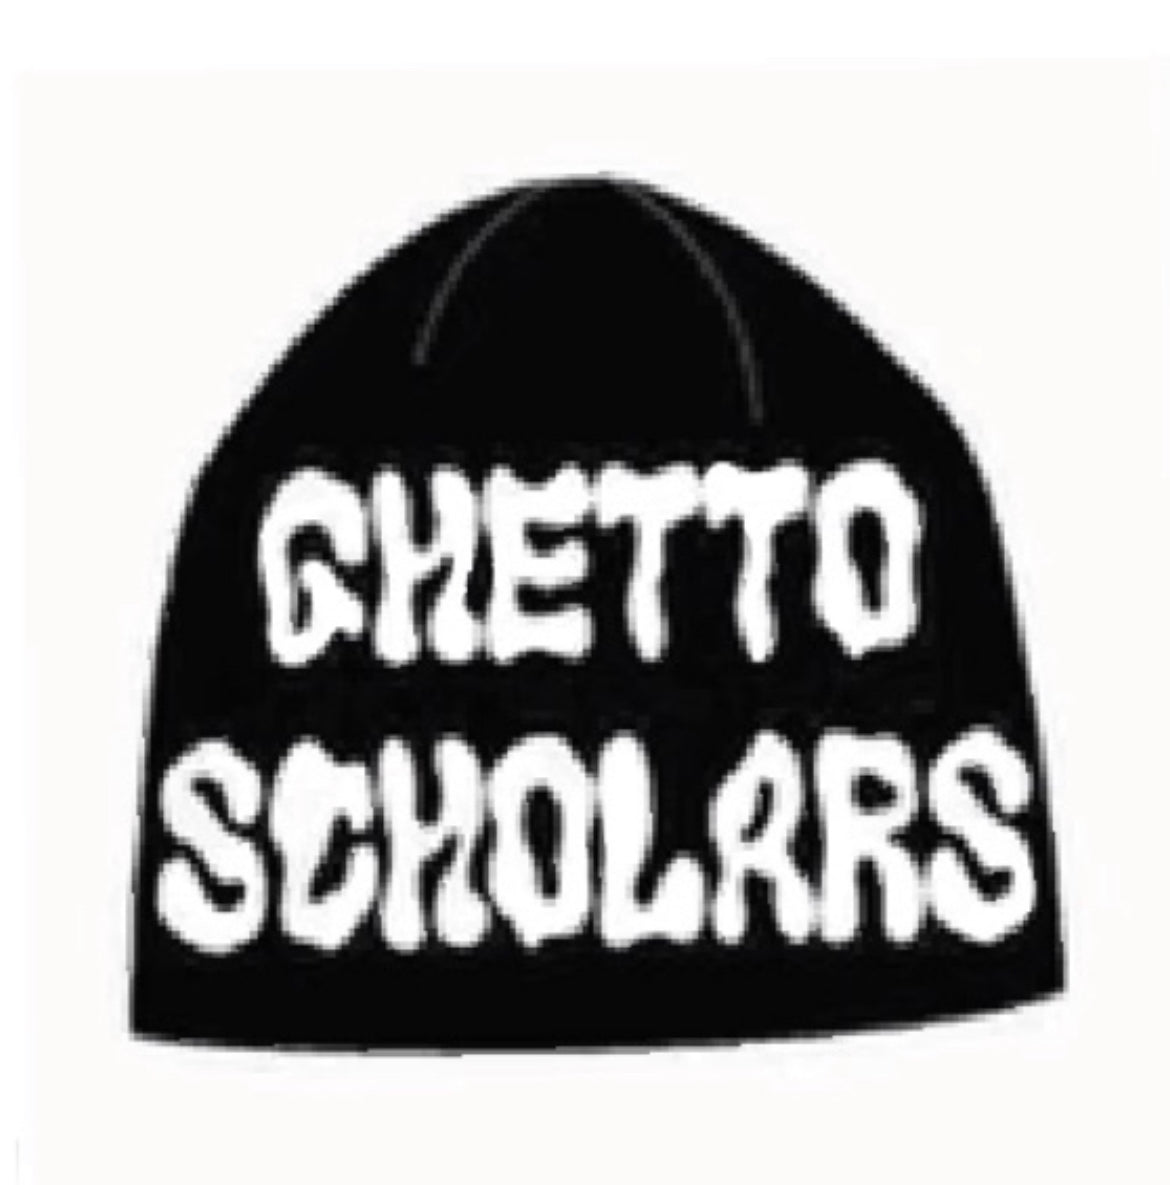 Ghetto Scholars Beanies